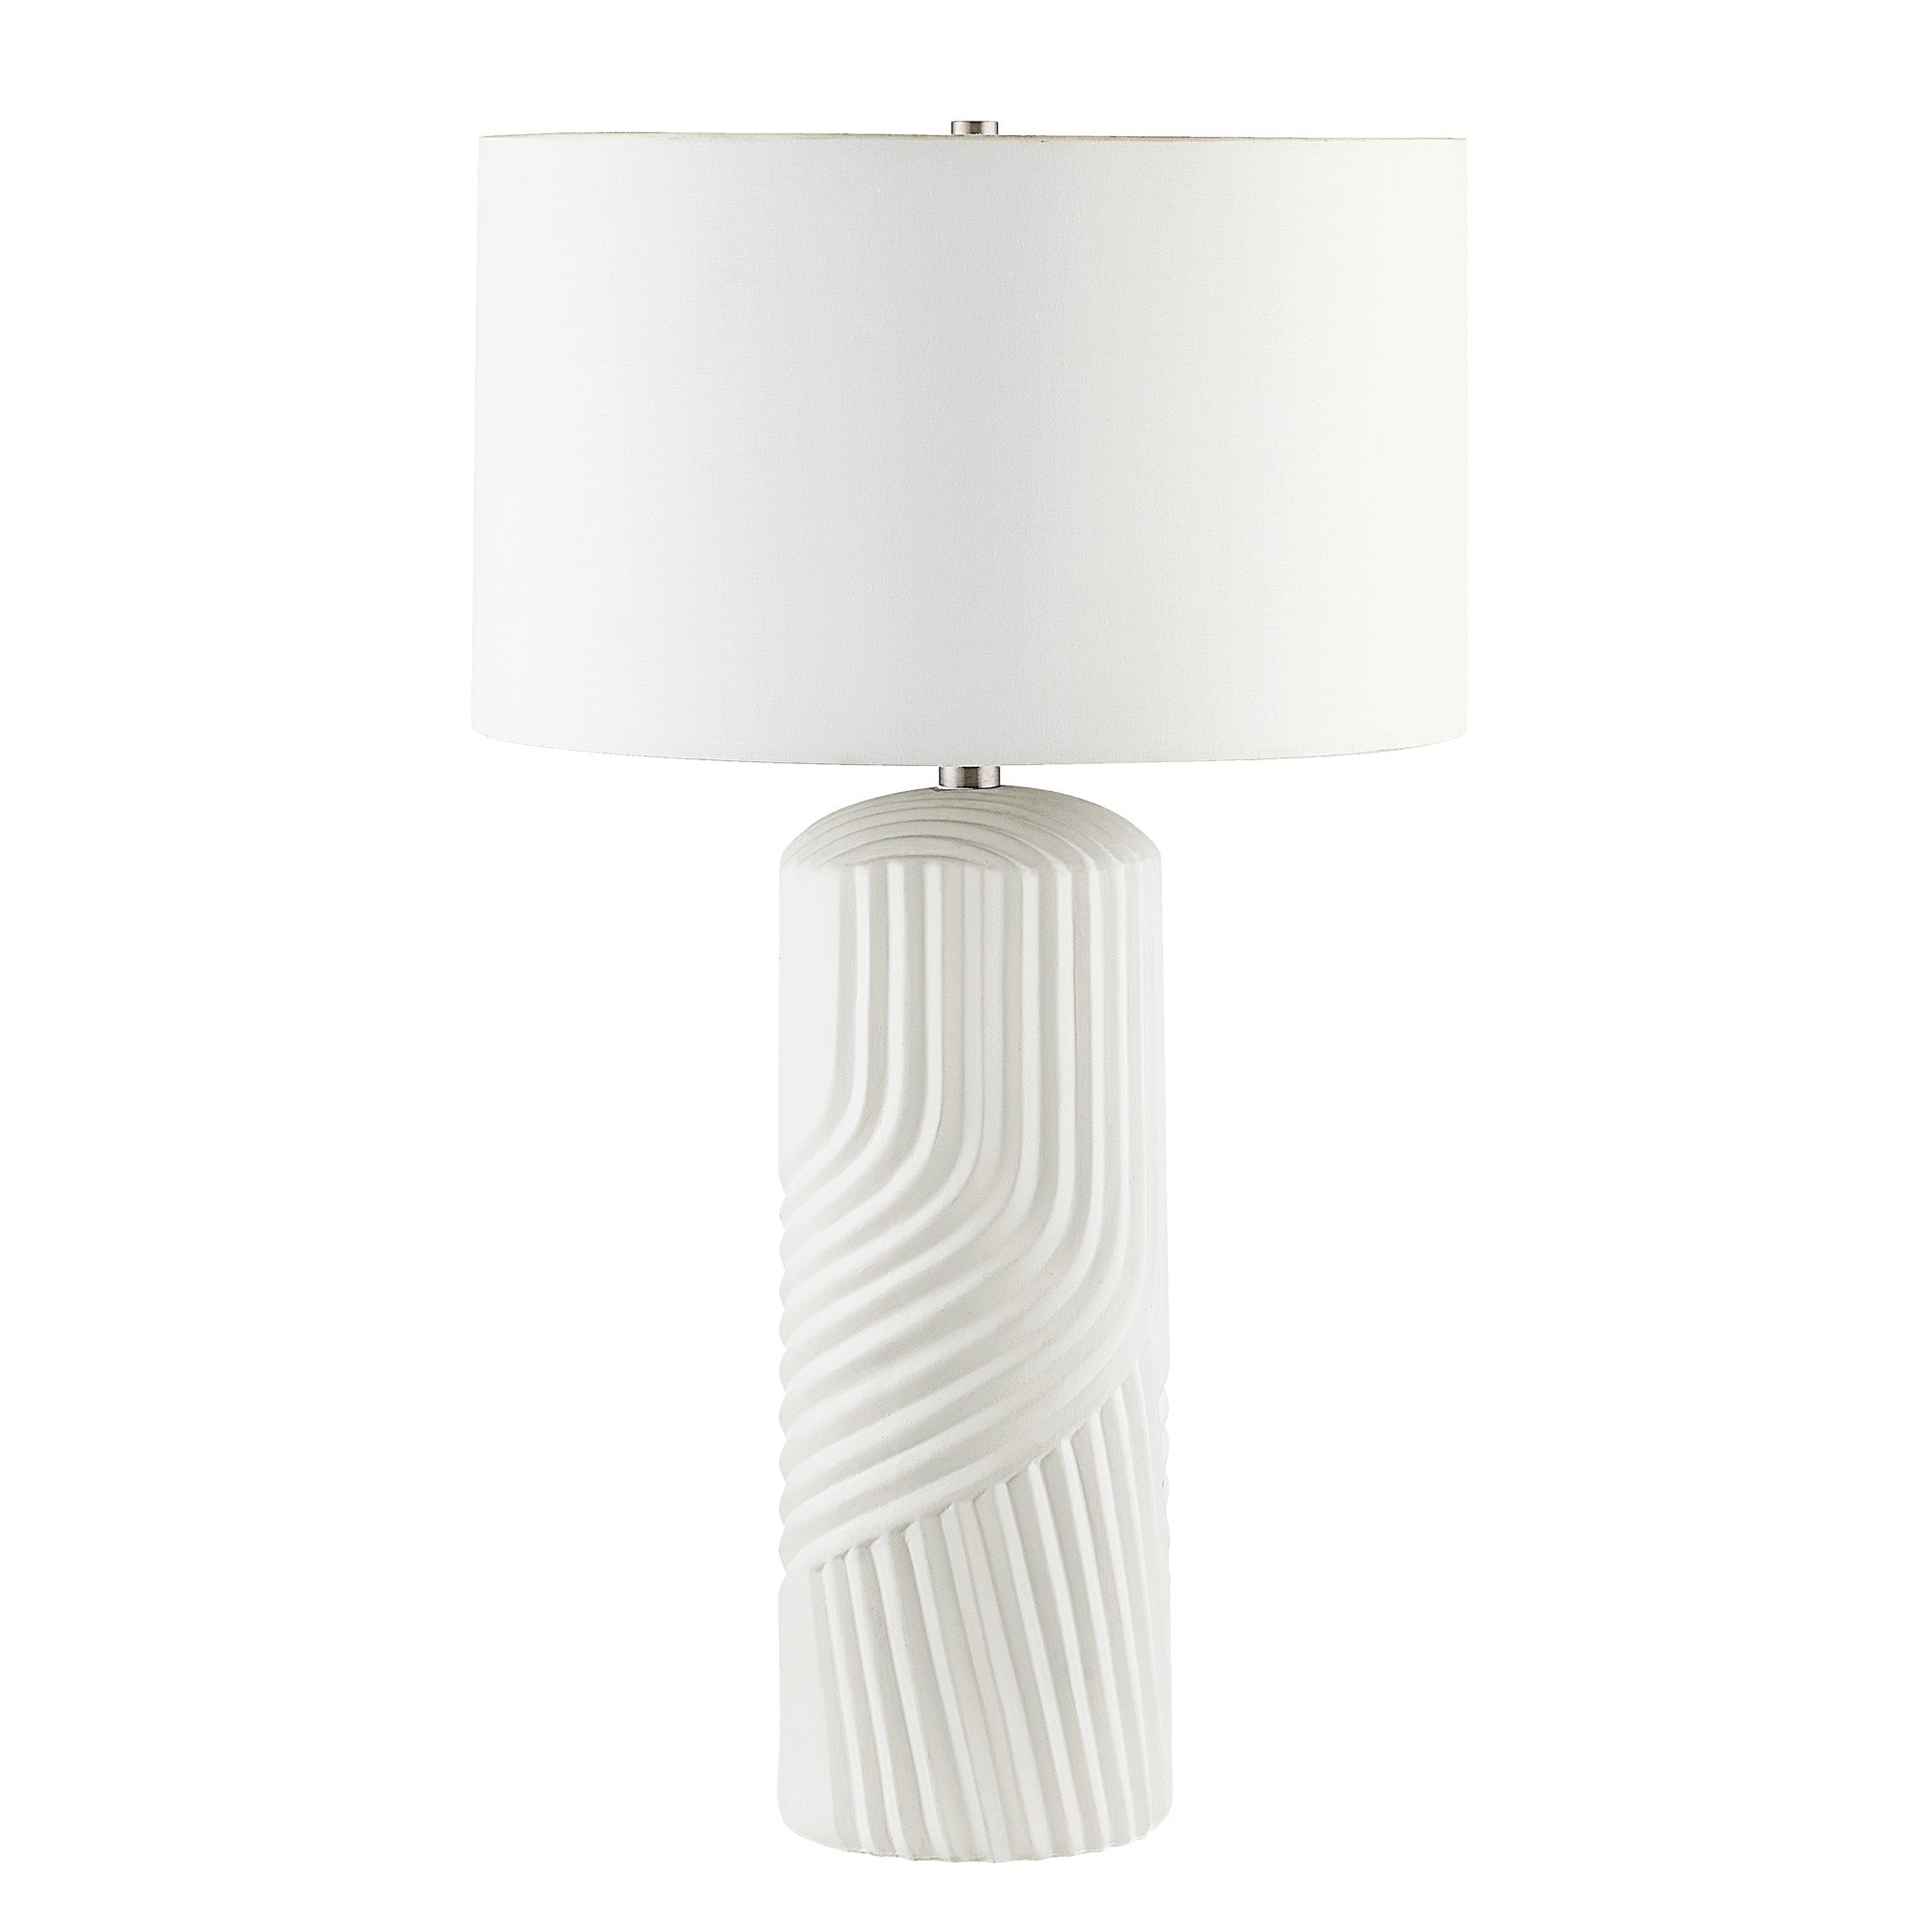 Renwil - VALERIE Table Lamp - LPT1218 - White